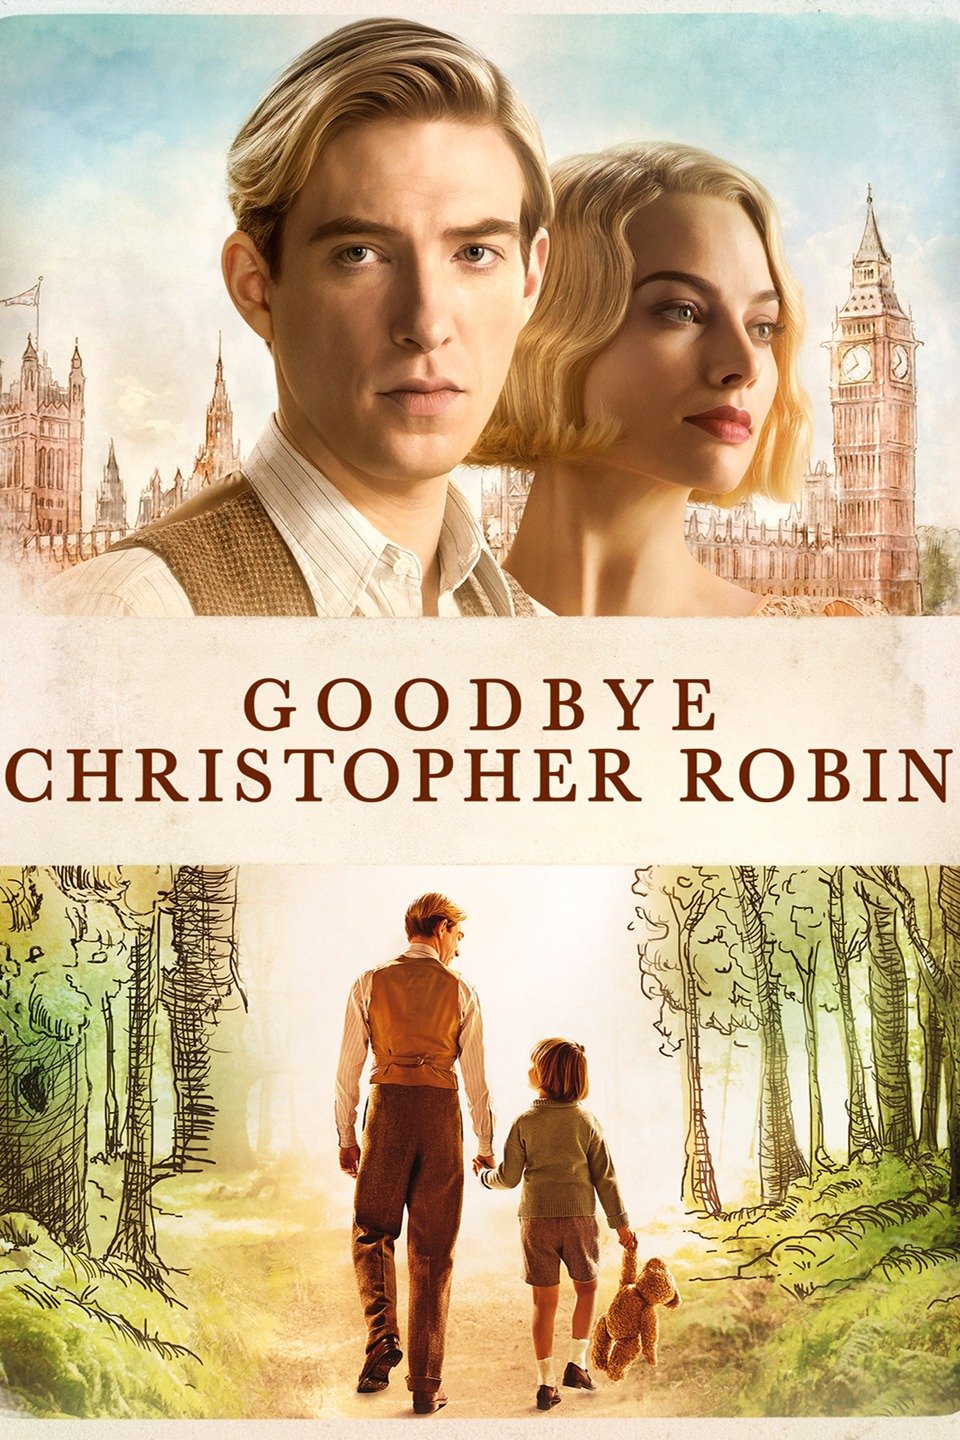 [MINI Super-HQ] Goodbye Christopher Robin (2017) แด่ คริสโตเฟอร์ โรบิน ตำนานวินนี เดอะ พูห์ [1080p] [พากย์ไทย 5.1 + เสียงอังกฤษ DTS] [BrRip.DTS.x264] [บรรยายไทย + อังกฤษ] [เสียงไทย + ซับไทย] [ONE2UP]